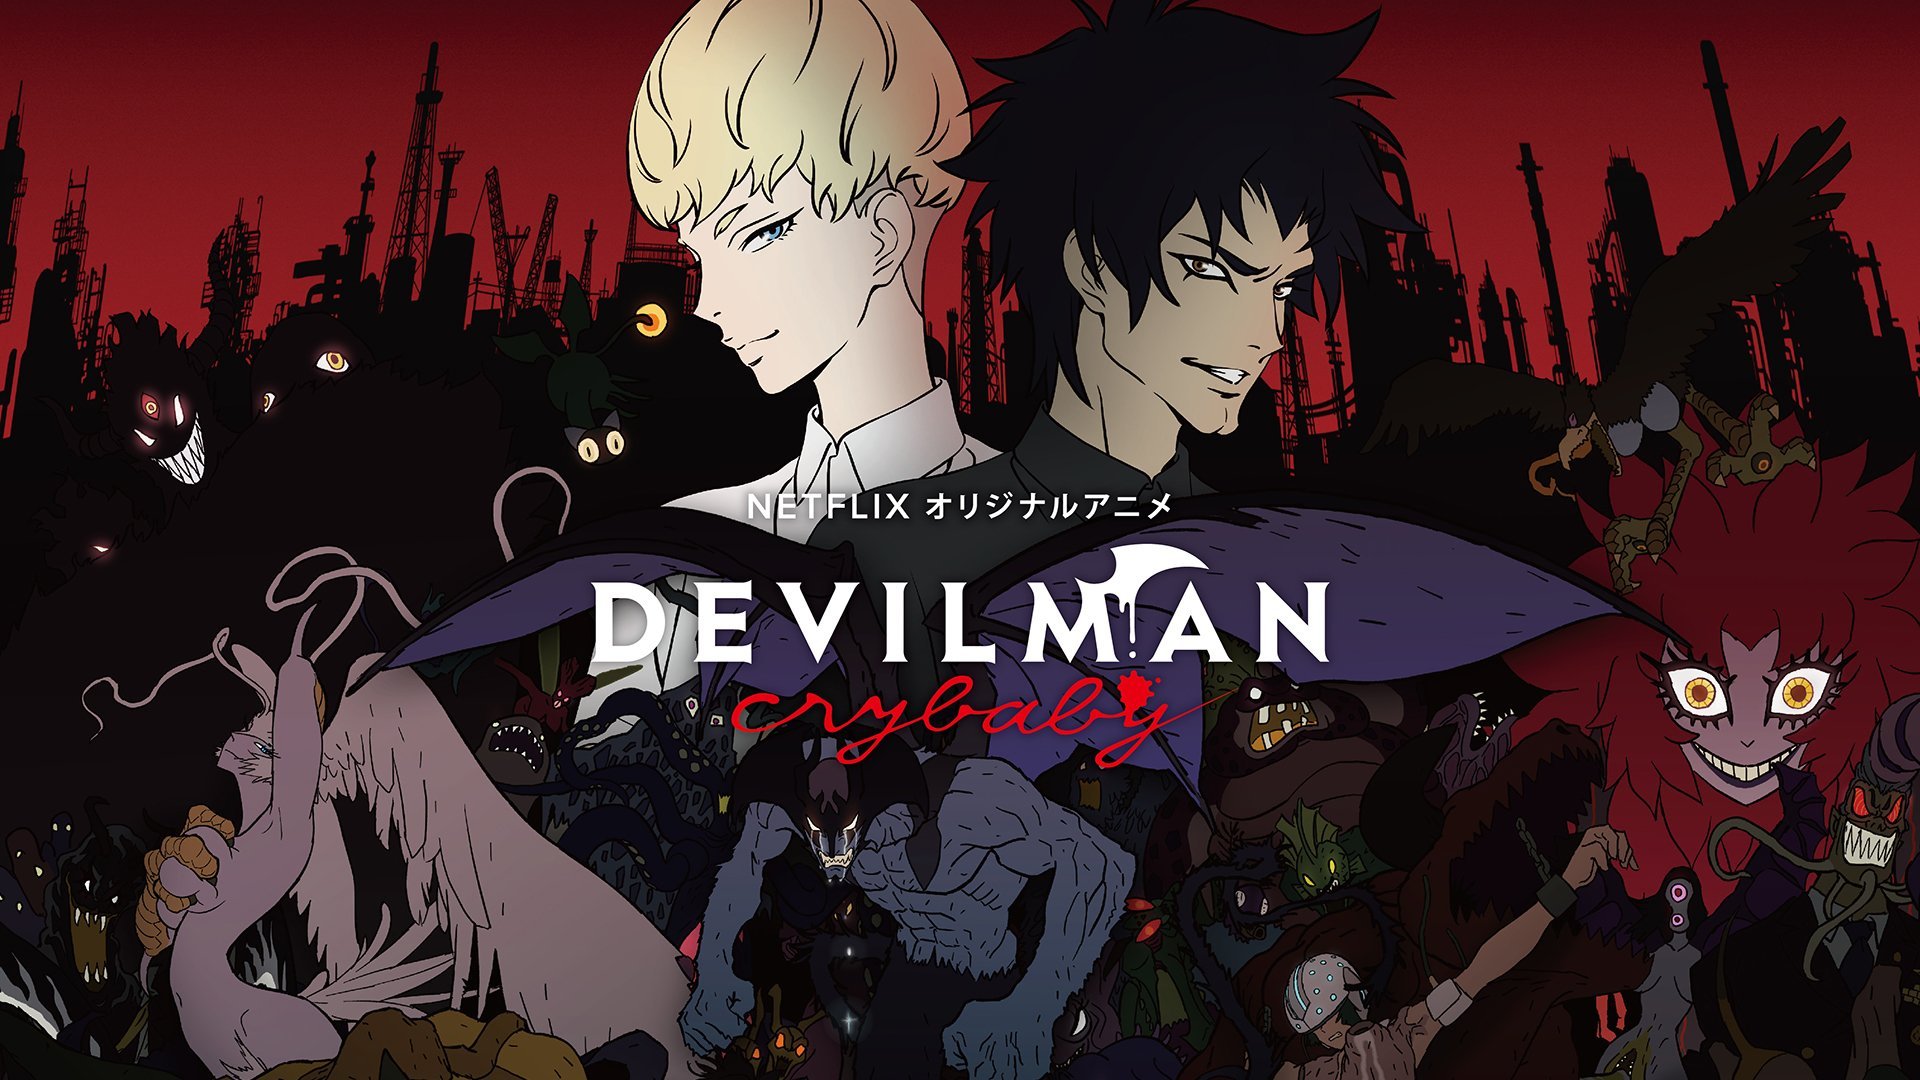 Devilman Crybaby - Adult anime series